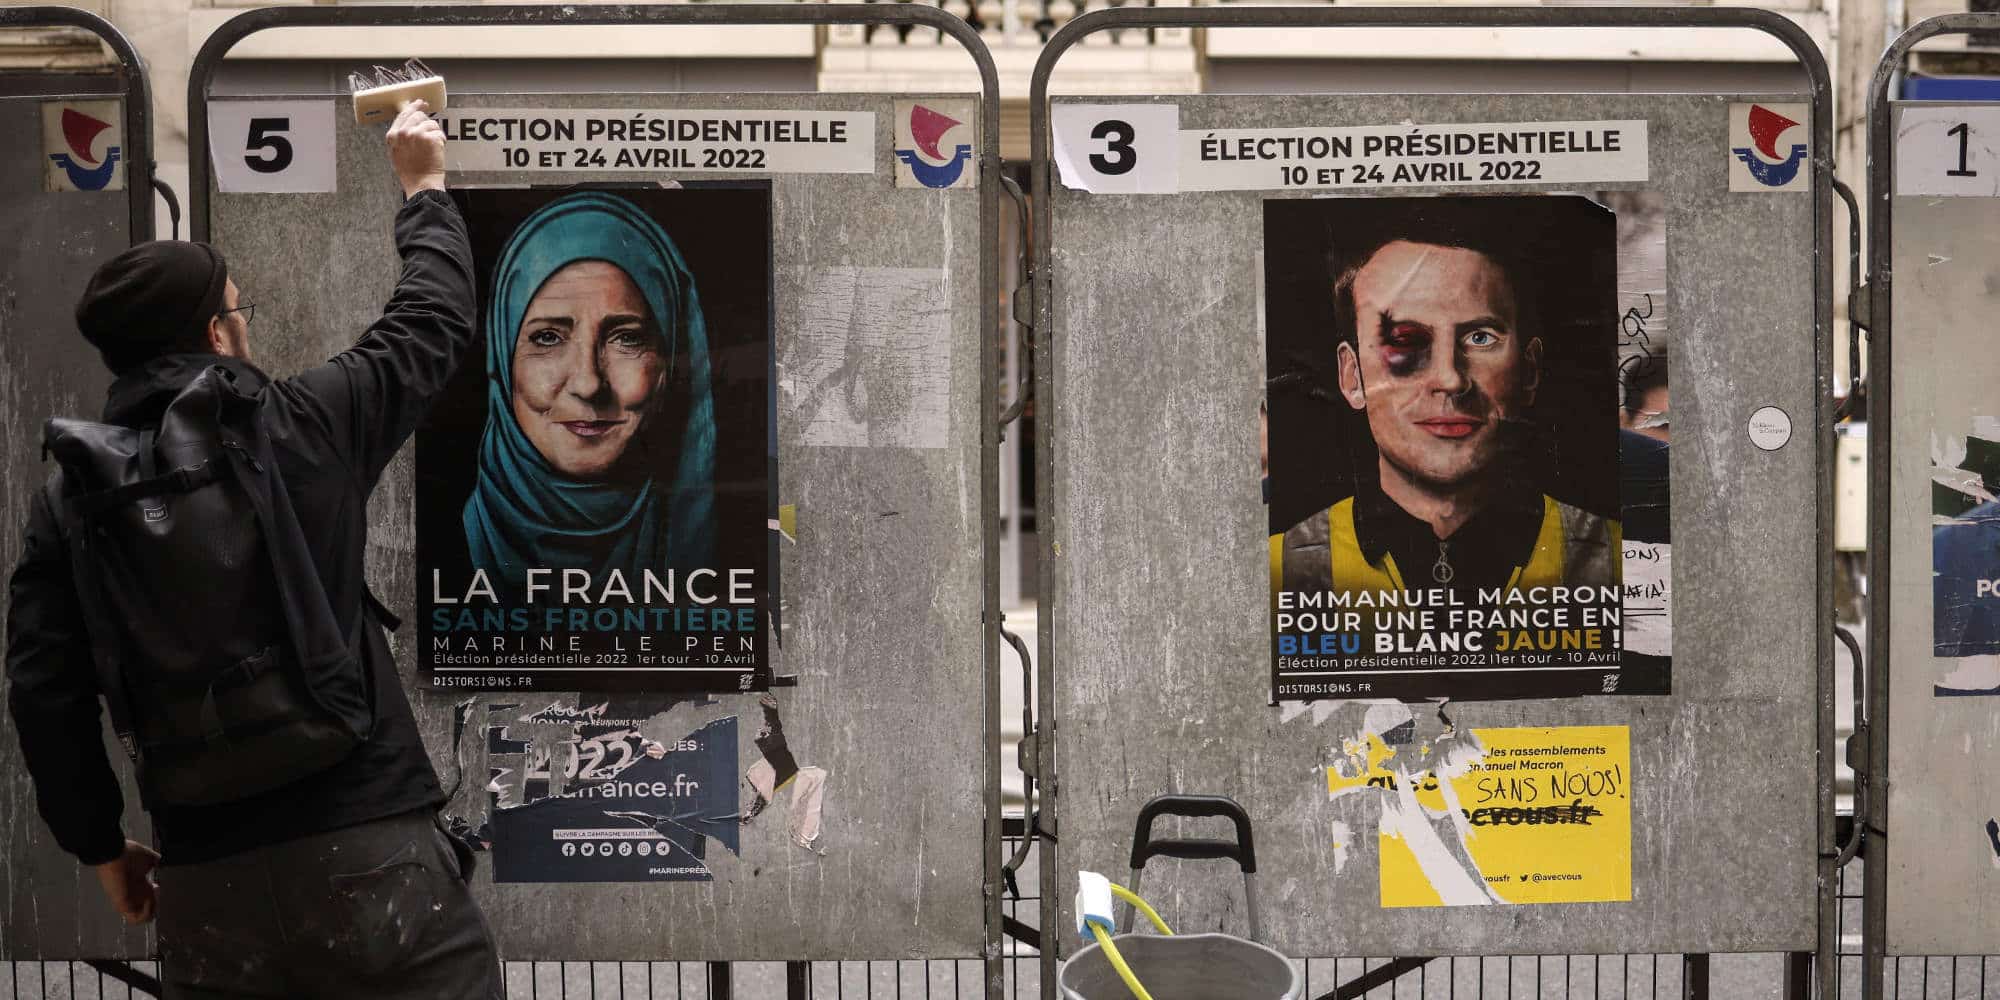 Street Artist στη Γαλλία αποτυπώνει τη Μαρίν Λεπέν με μαντήλα και τον Εμανουέλ Μακρόν με μαυρισμένο μάτι και κίτρινο γιλέκο